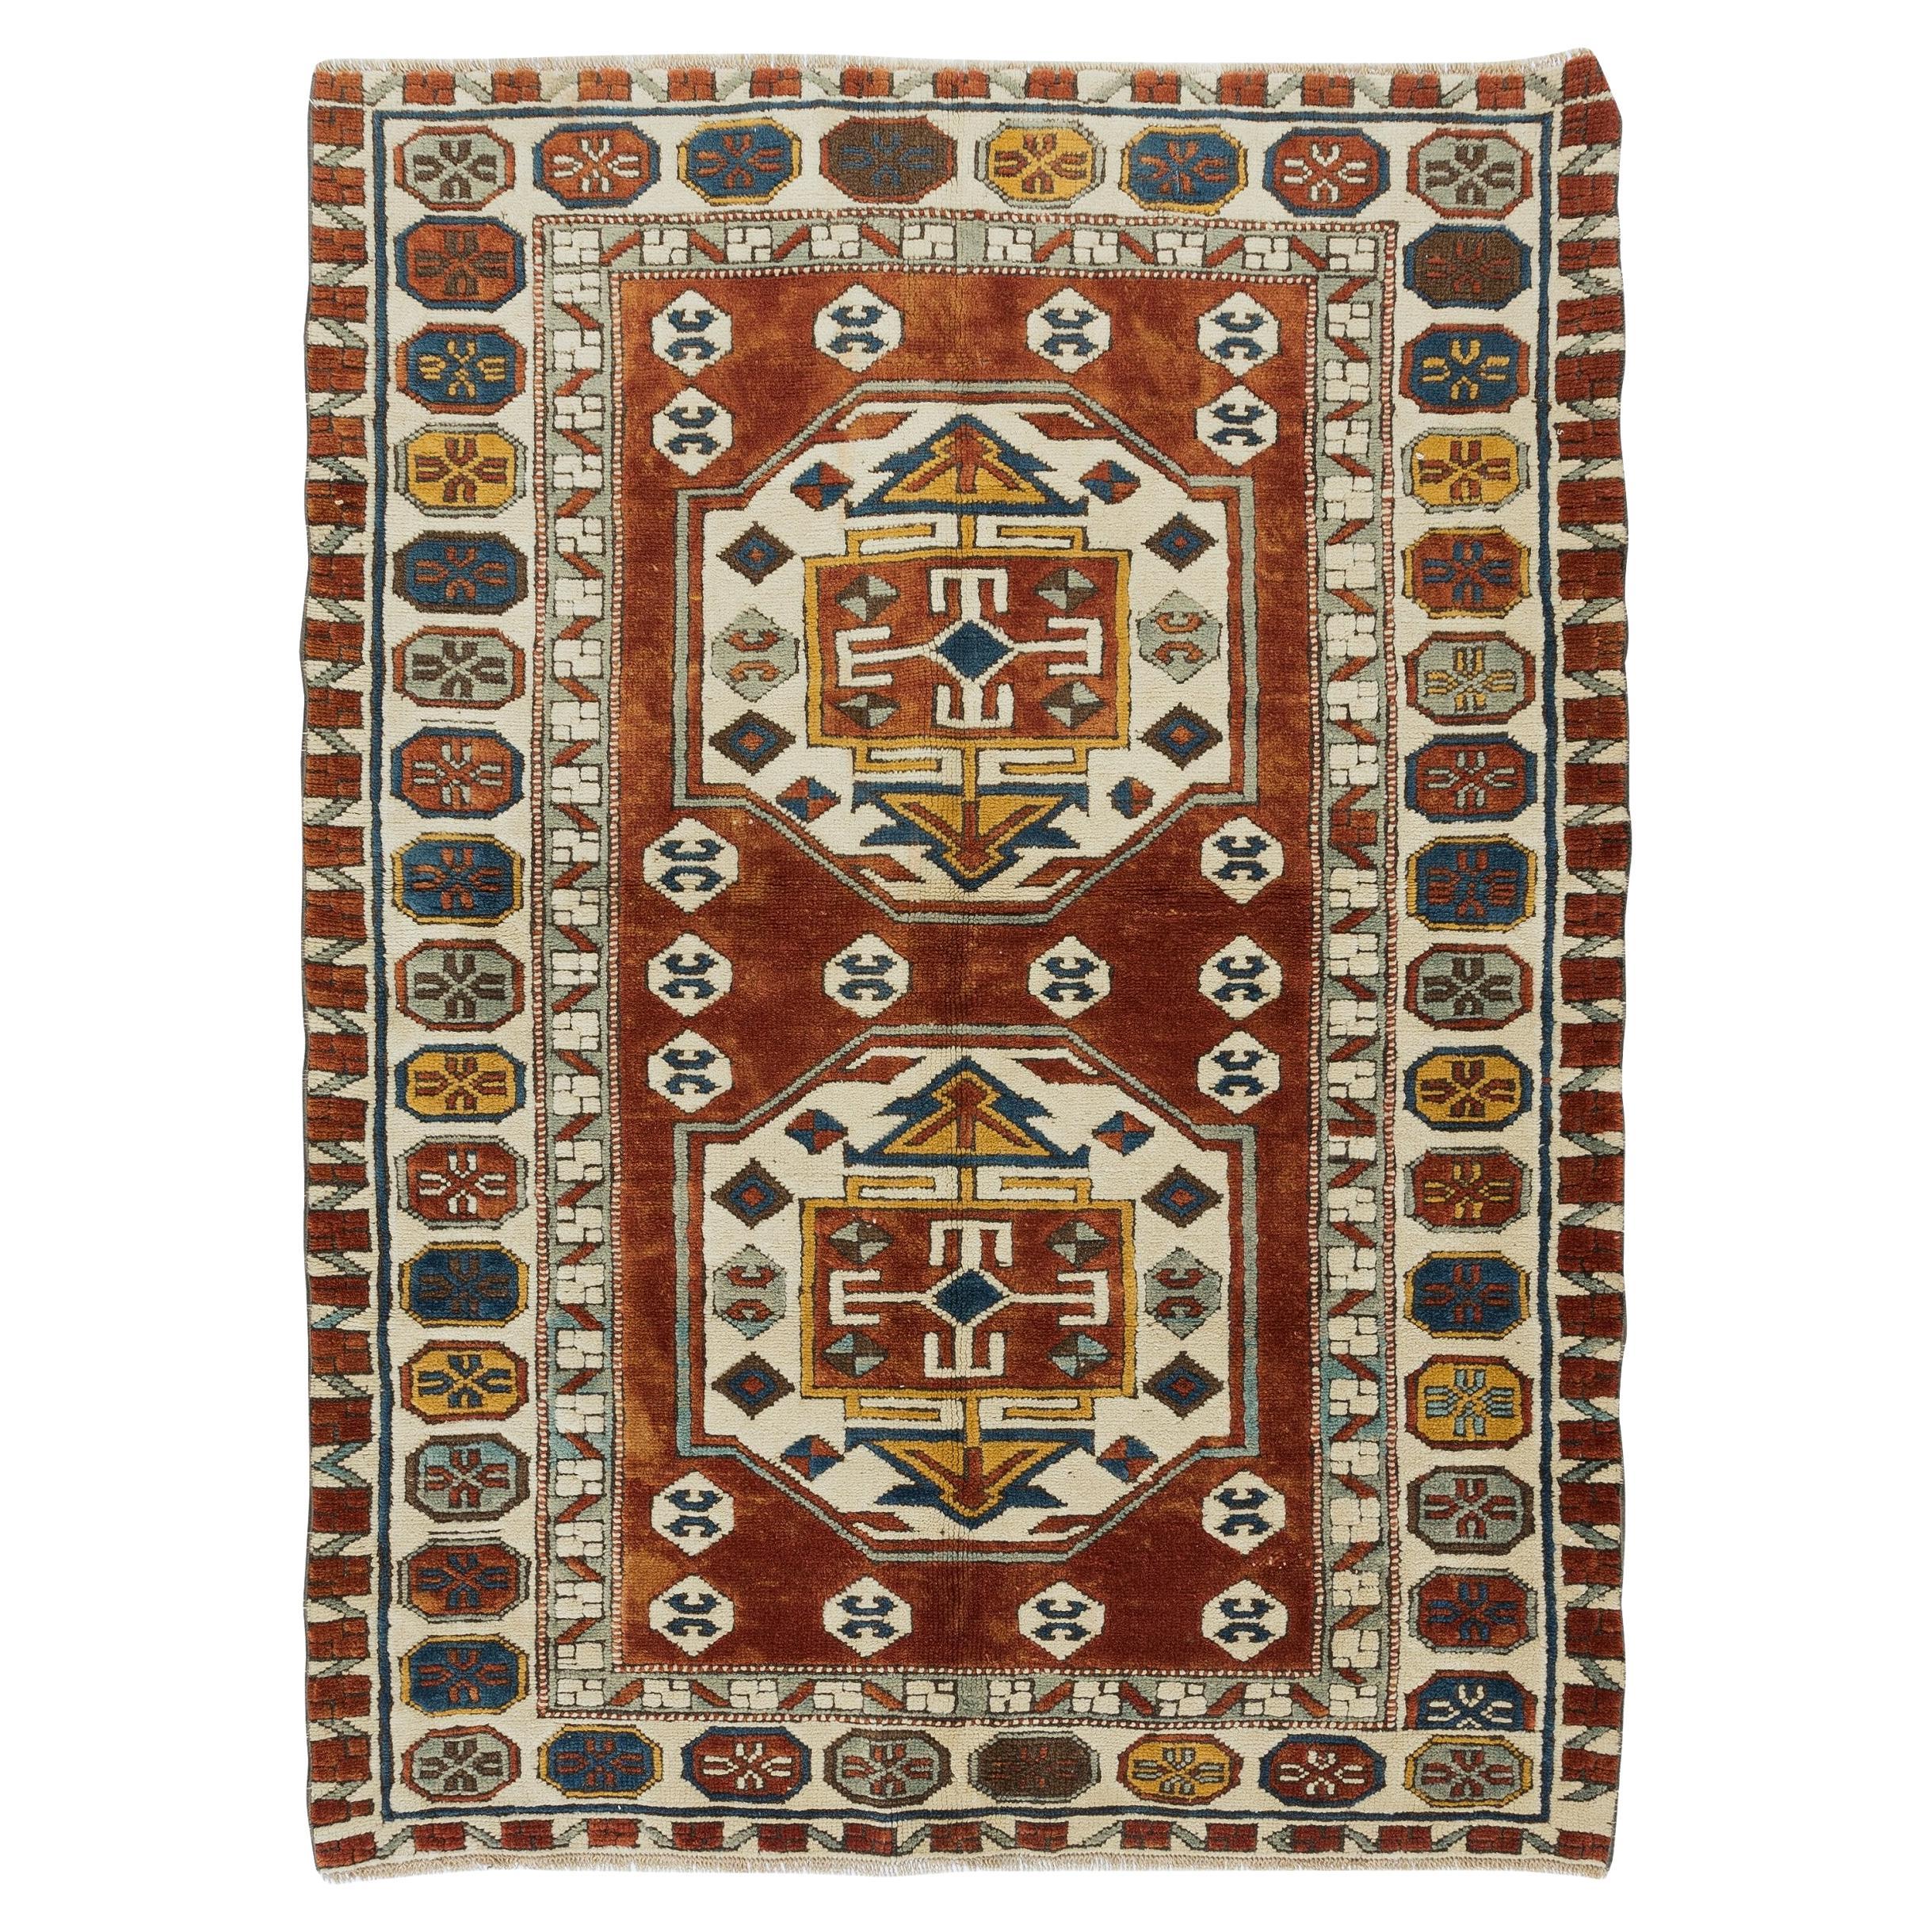 4.2x5.7 Ft Decorative Handmade Turkish Red Rug, Modern Geometric Pattern Carpet